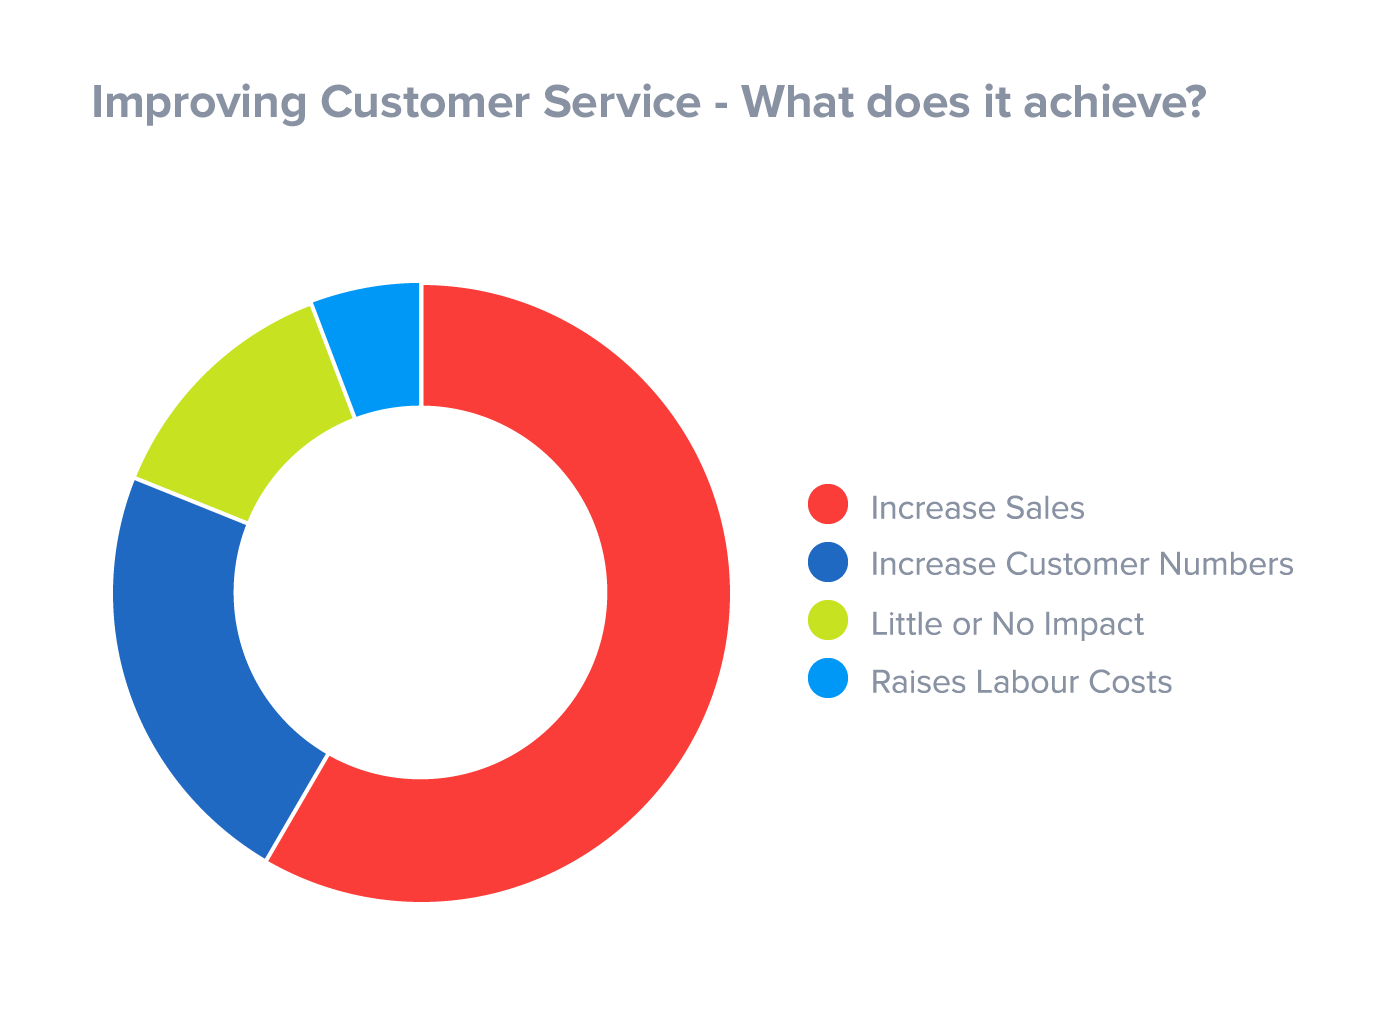 Improving customer service increases revenue